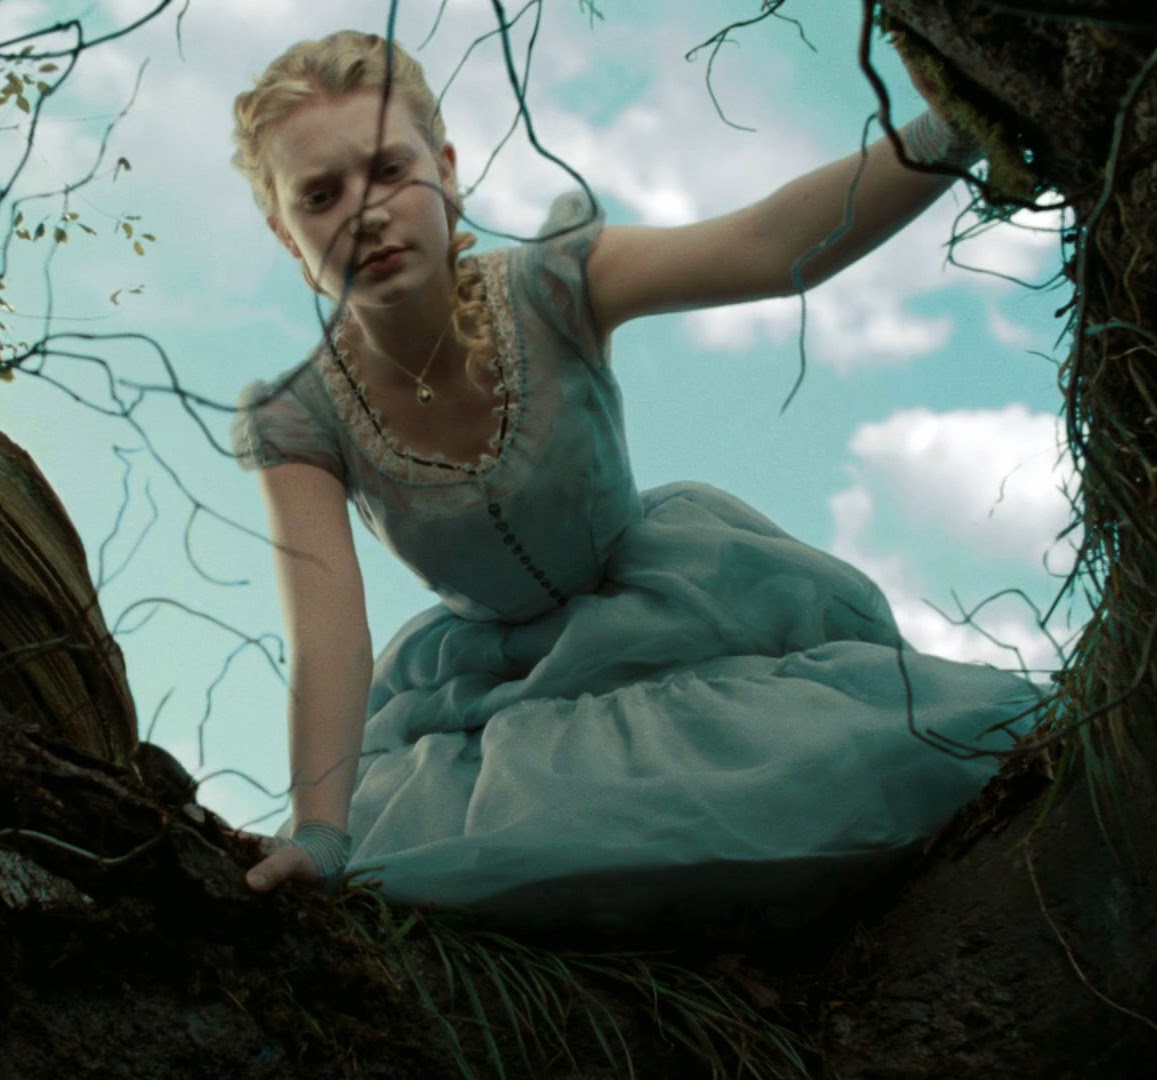 MOSTBEAUTIFULGIRLSCAPS: Alice in Wonderland.